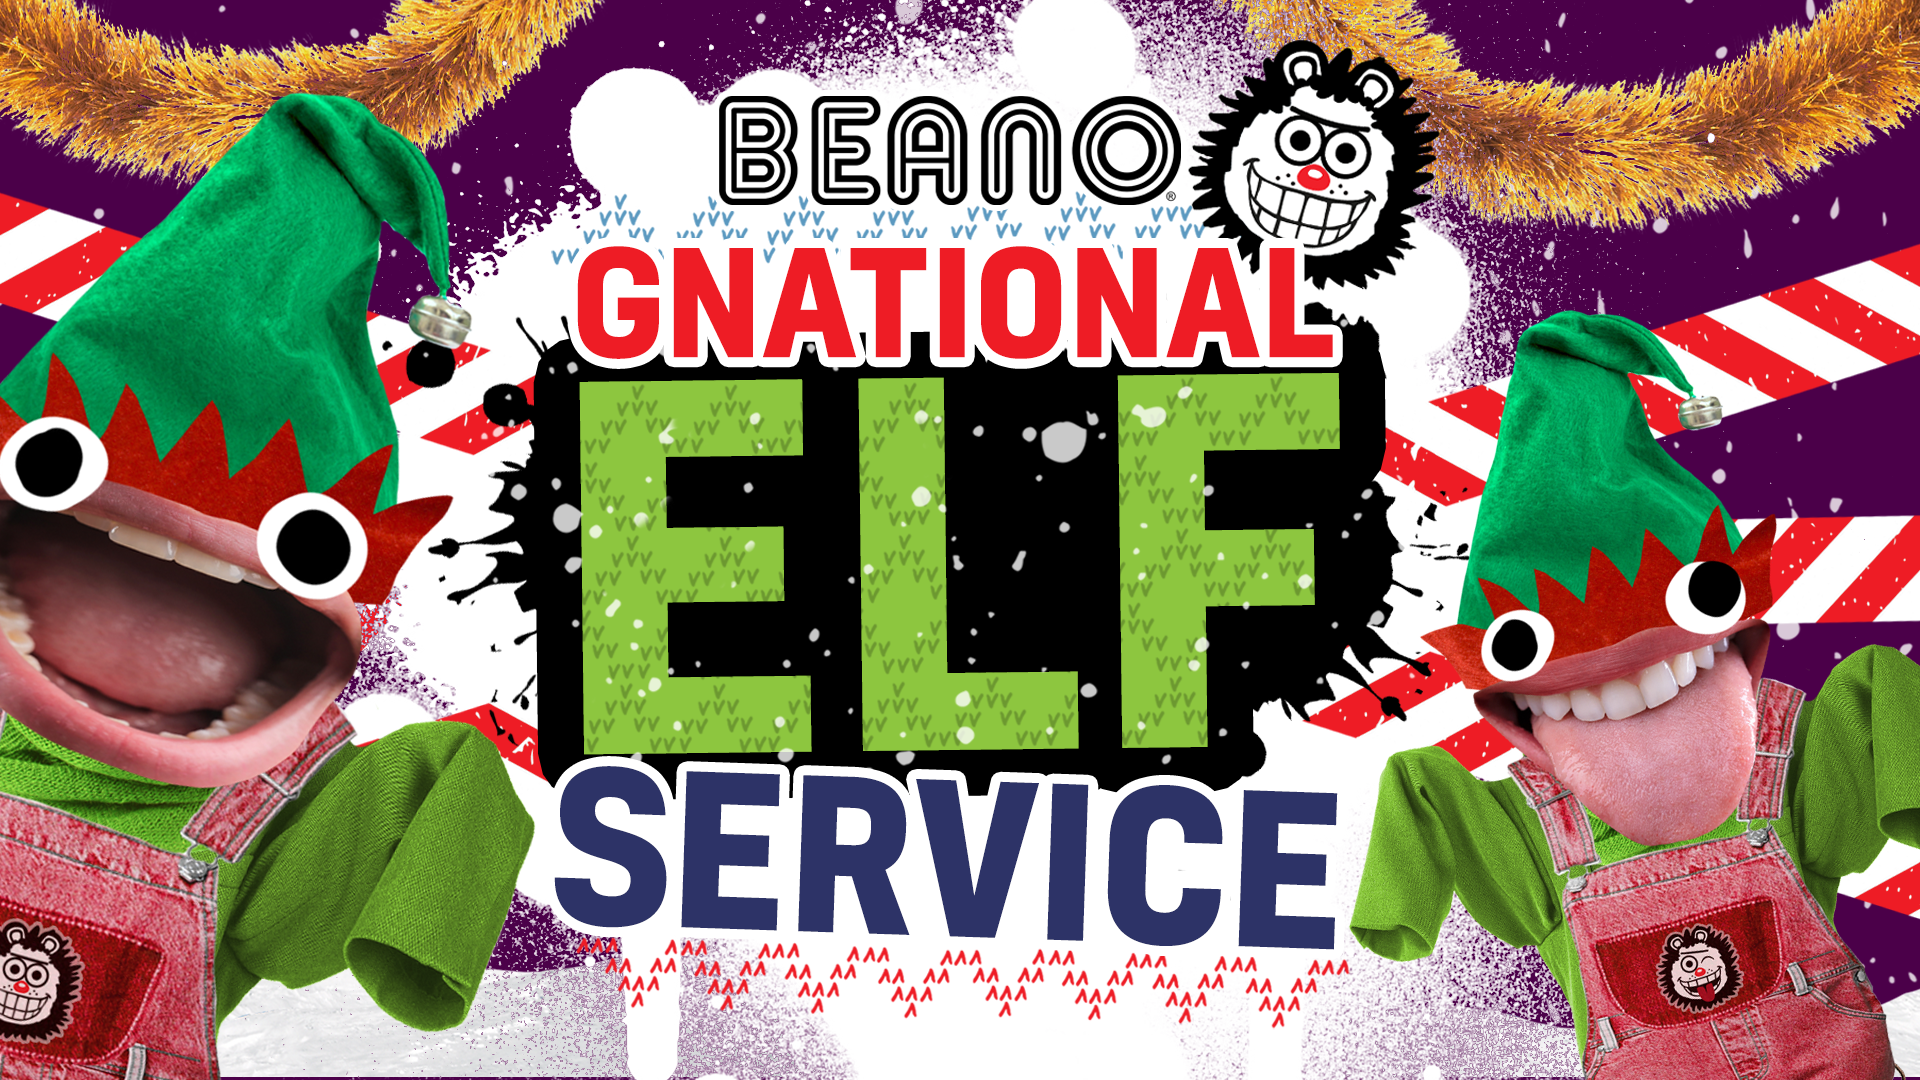 Beano's Gnational Elf Service!